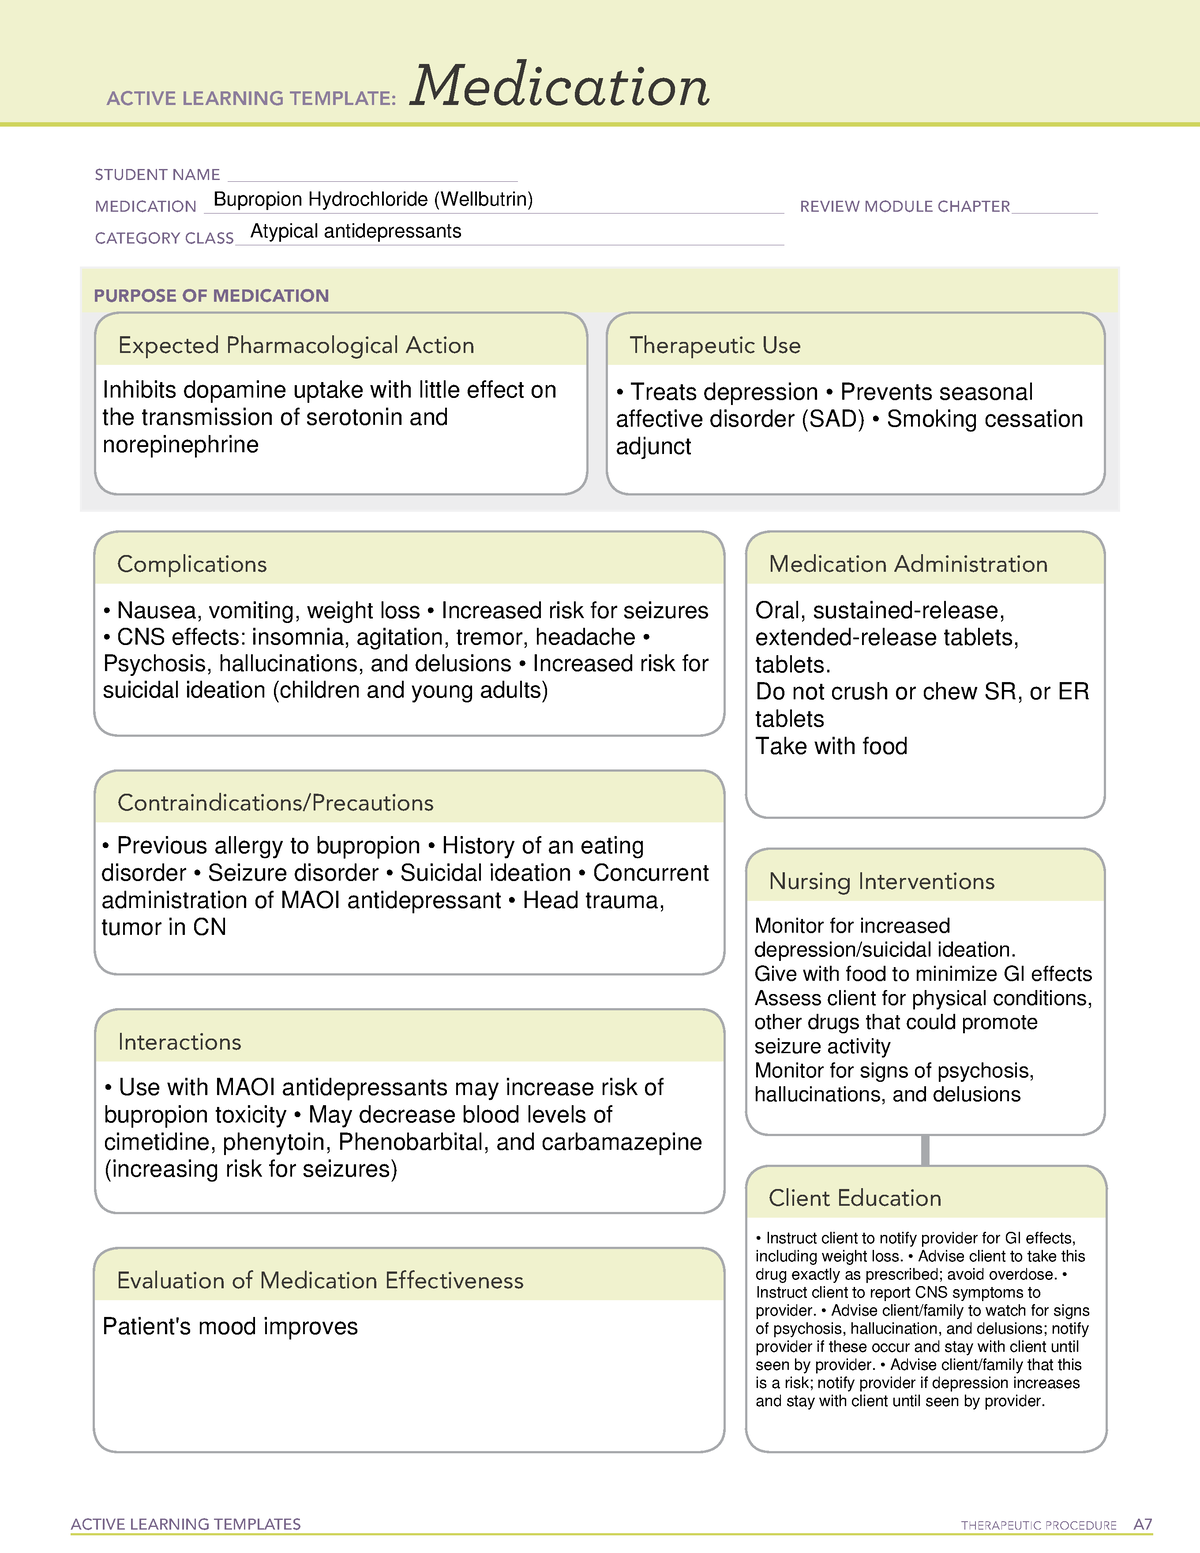 ATI Bupropion Hydrochloride (Wellbutrin) Medication Sheet ACTIVE